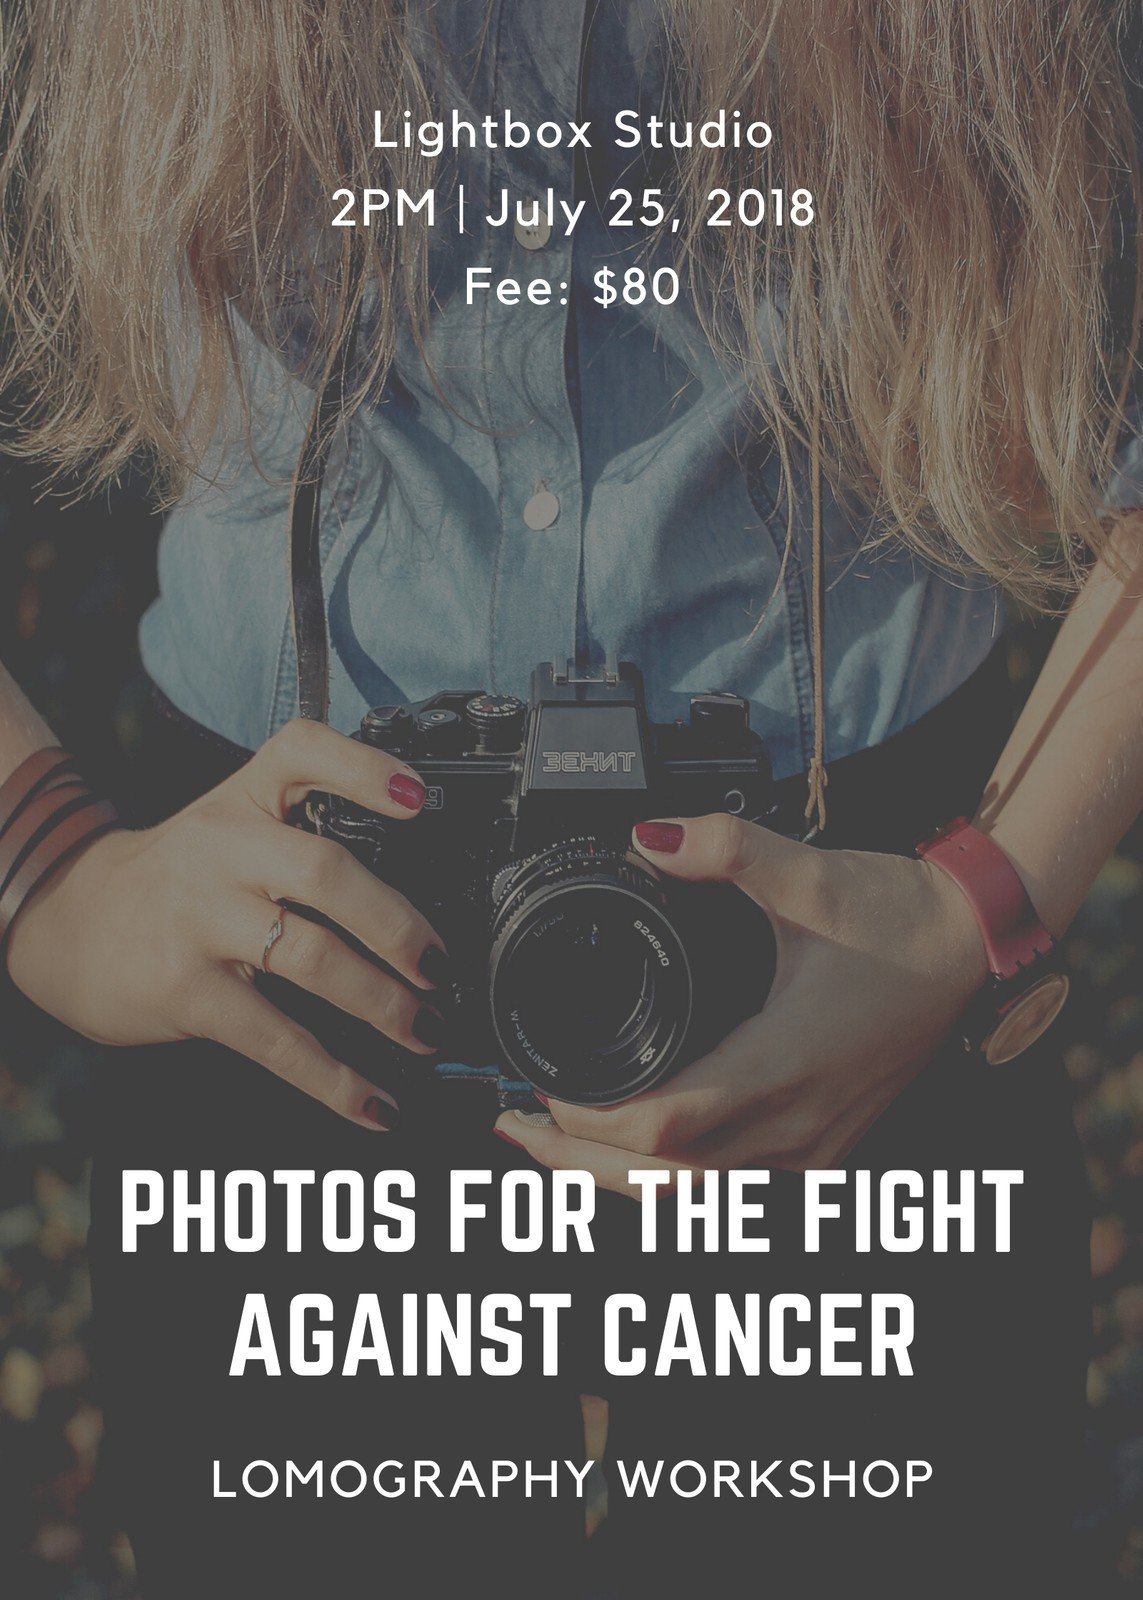 22+ Customize 22+ Fundraiser Flyers Templates Online - Canva Regarding Cancer Fundraiser Flyer Template